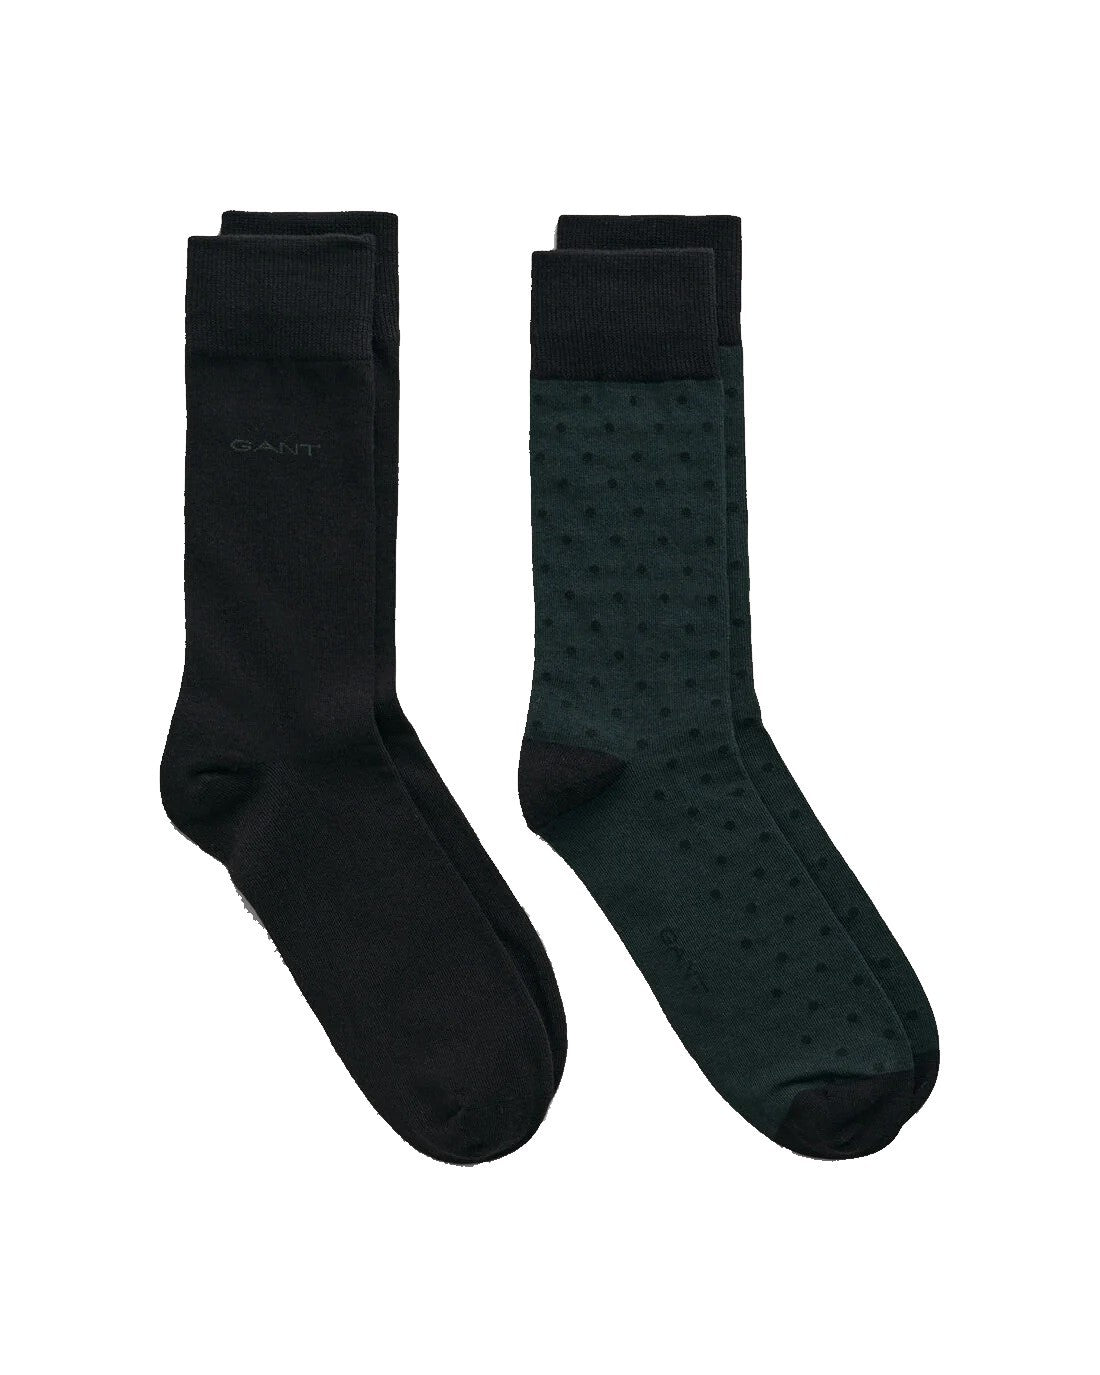 Gant Polka Dot And Solid Socks Green